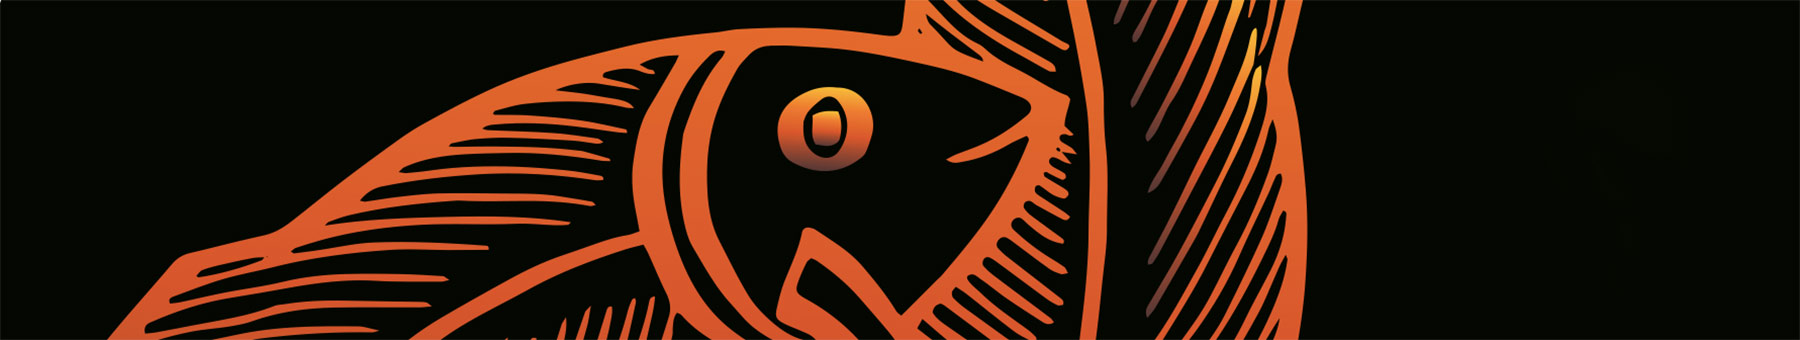 orange fish on a black background